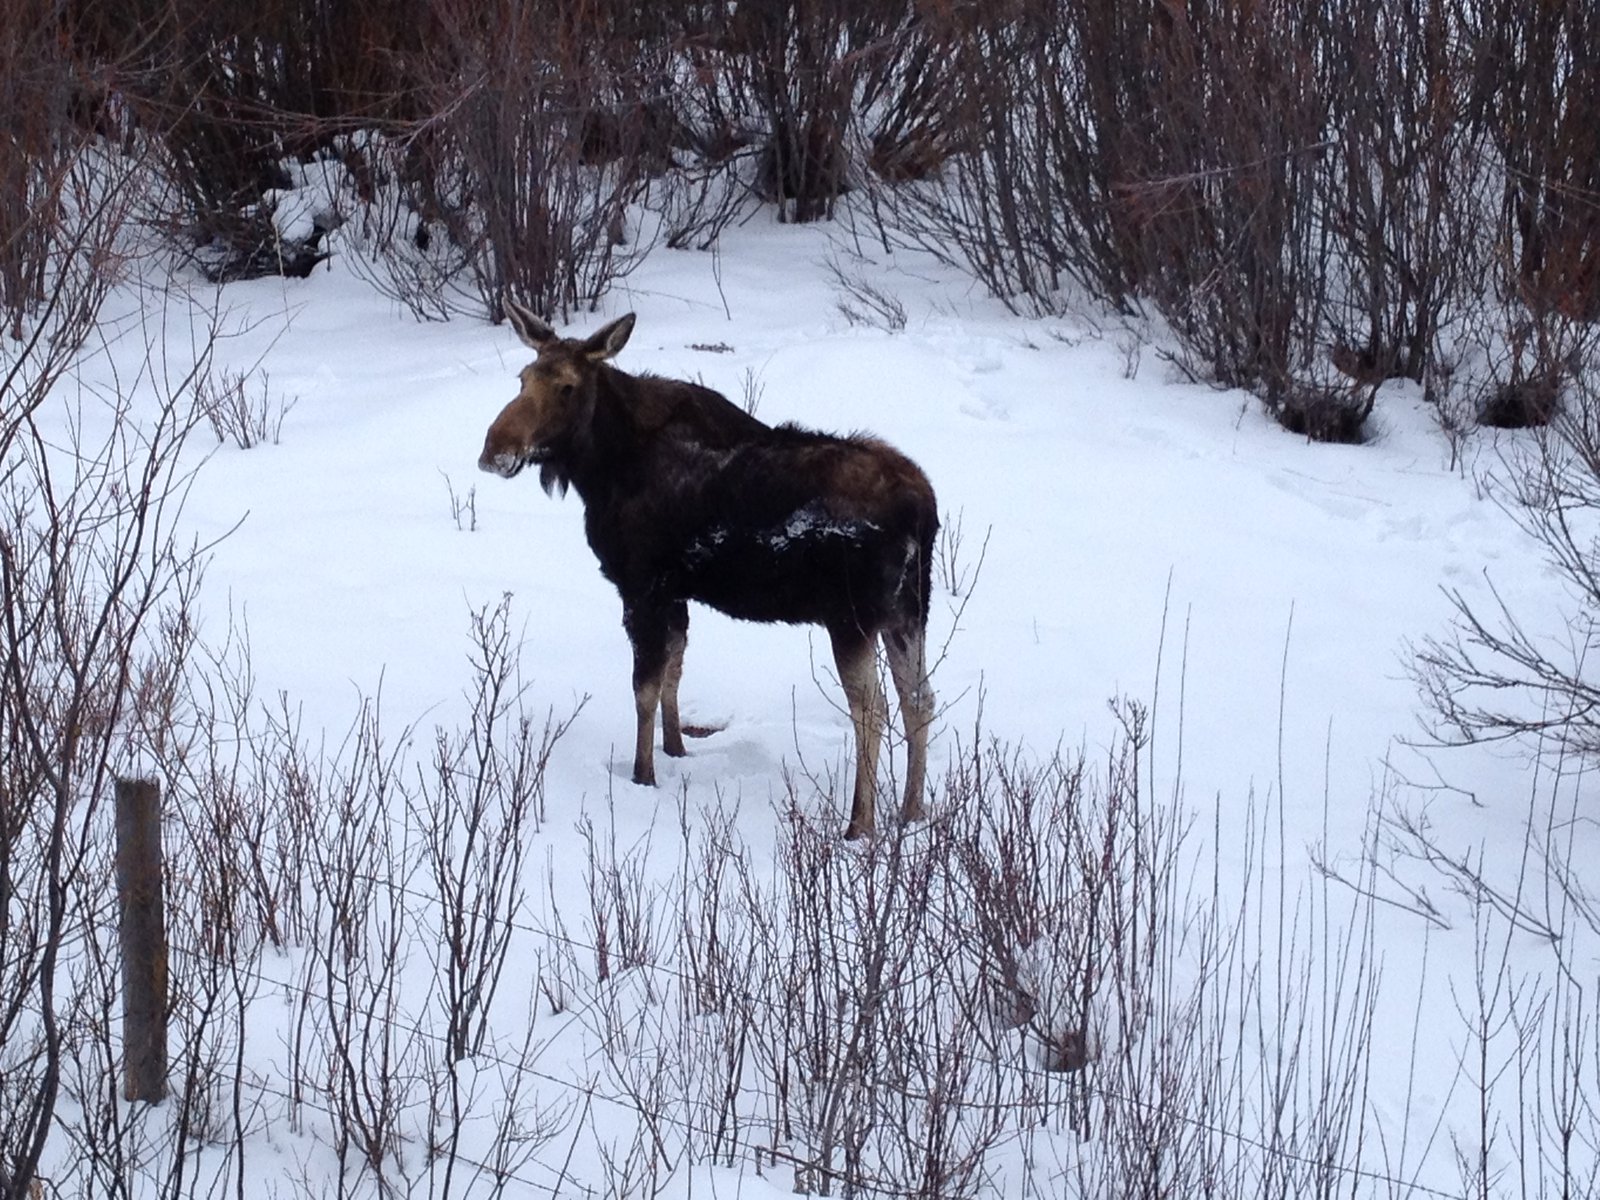 Moose in the backyard